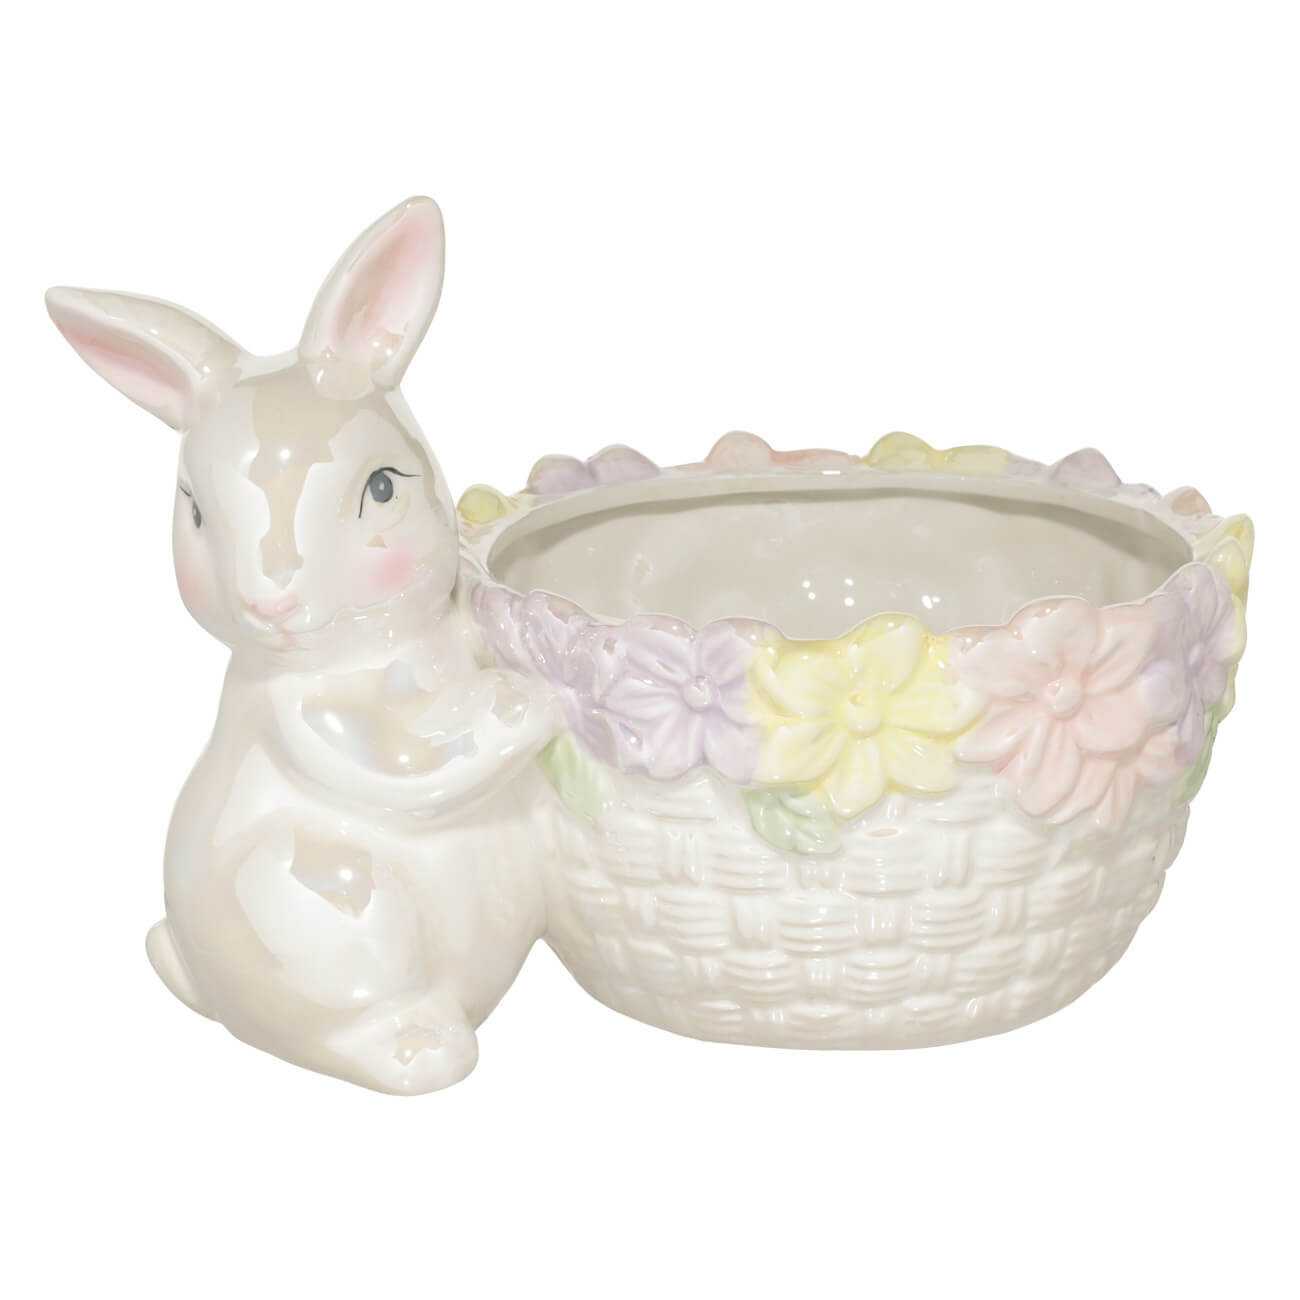 Конфетница, 18x13 см, керамика, белая, перламутр, Кролик и корзина с цветами, Easter